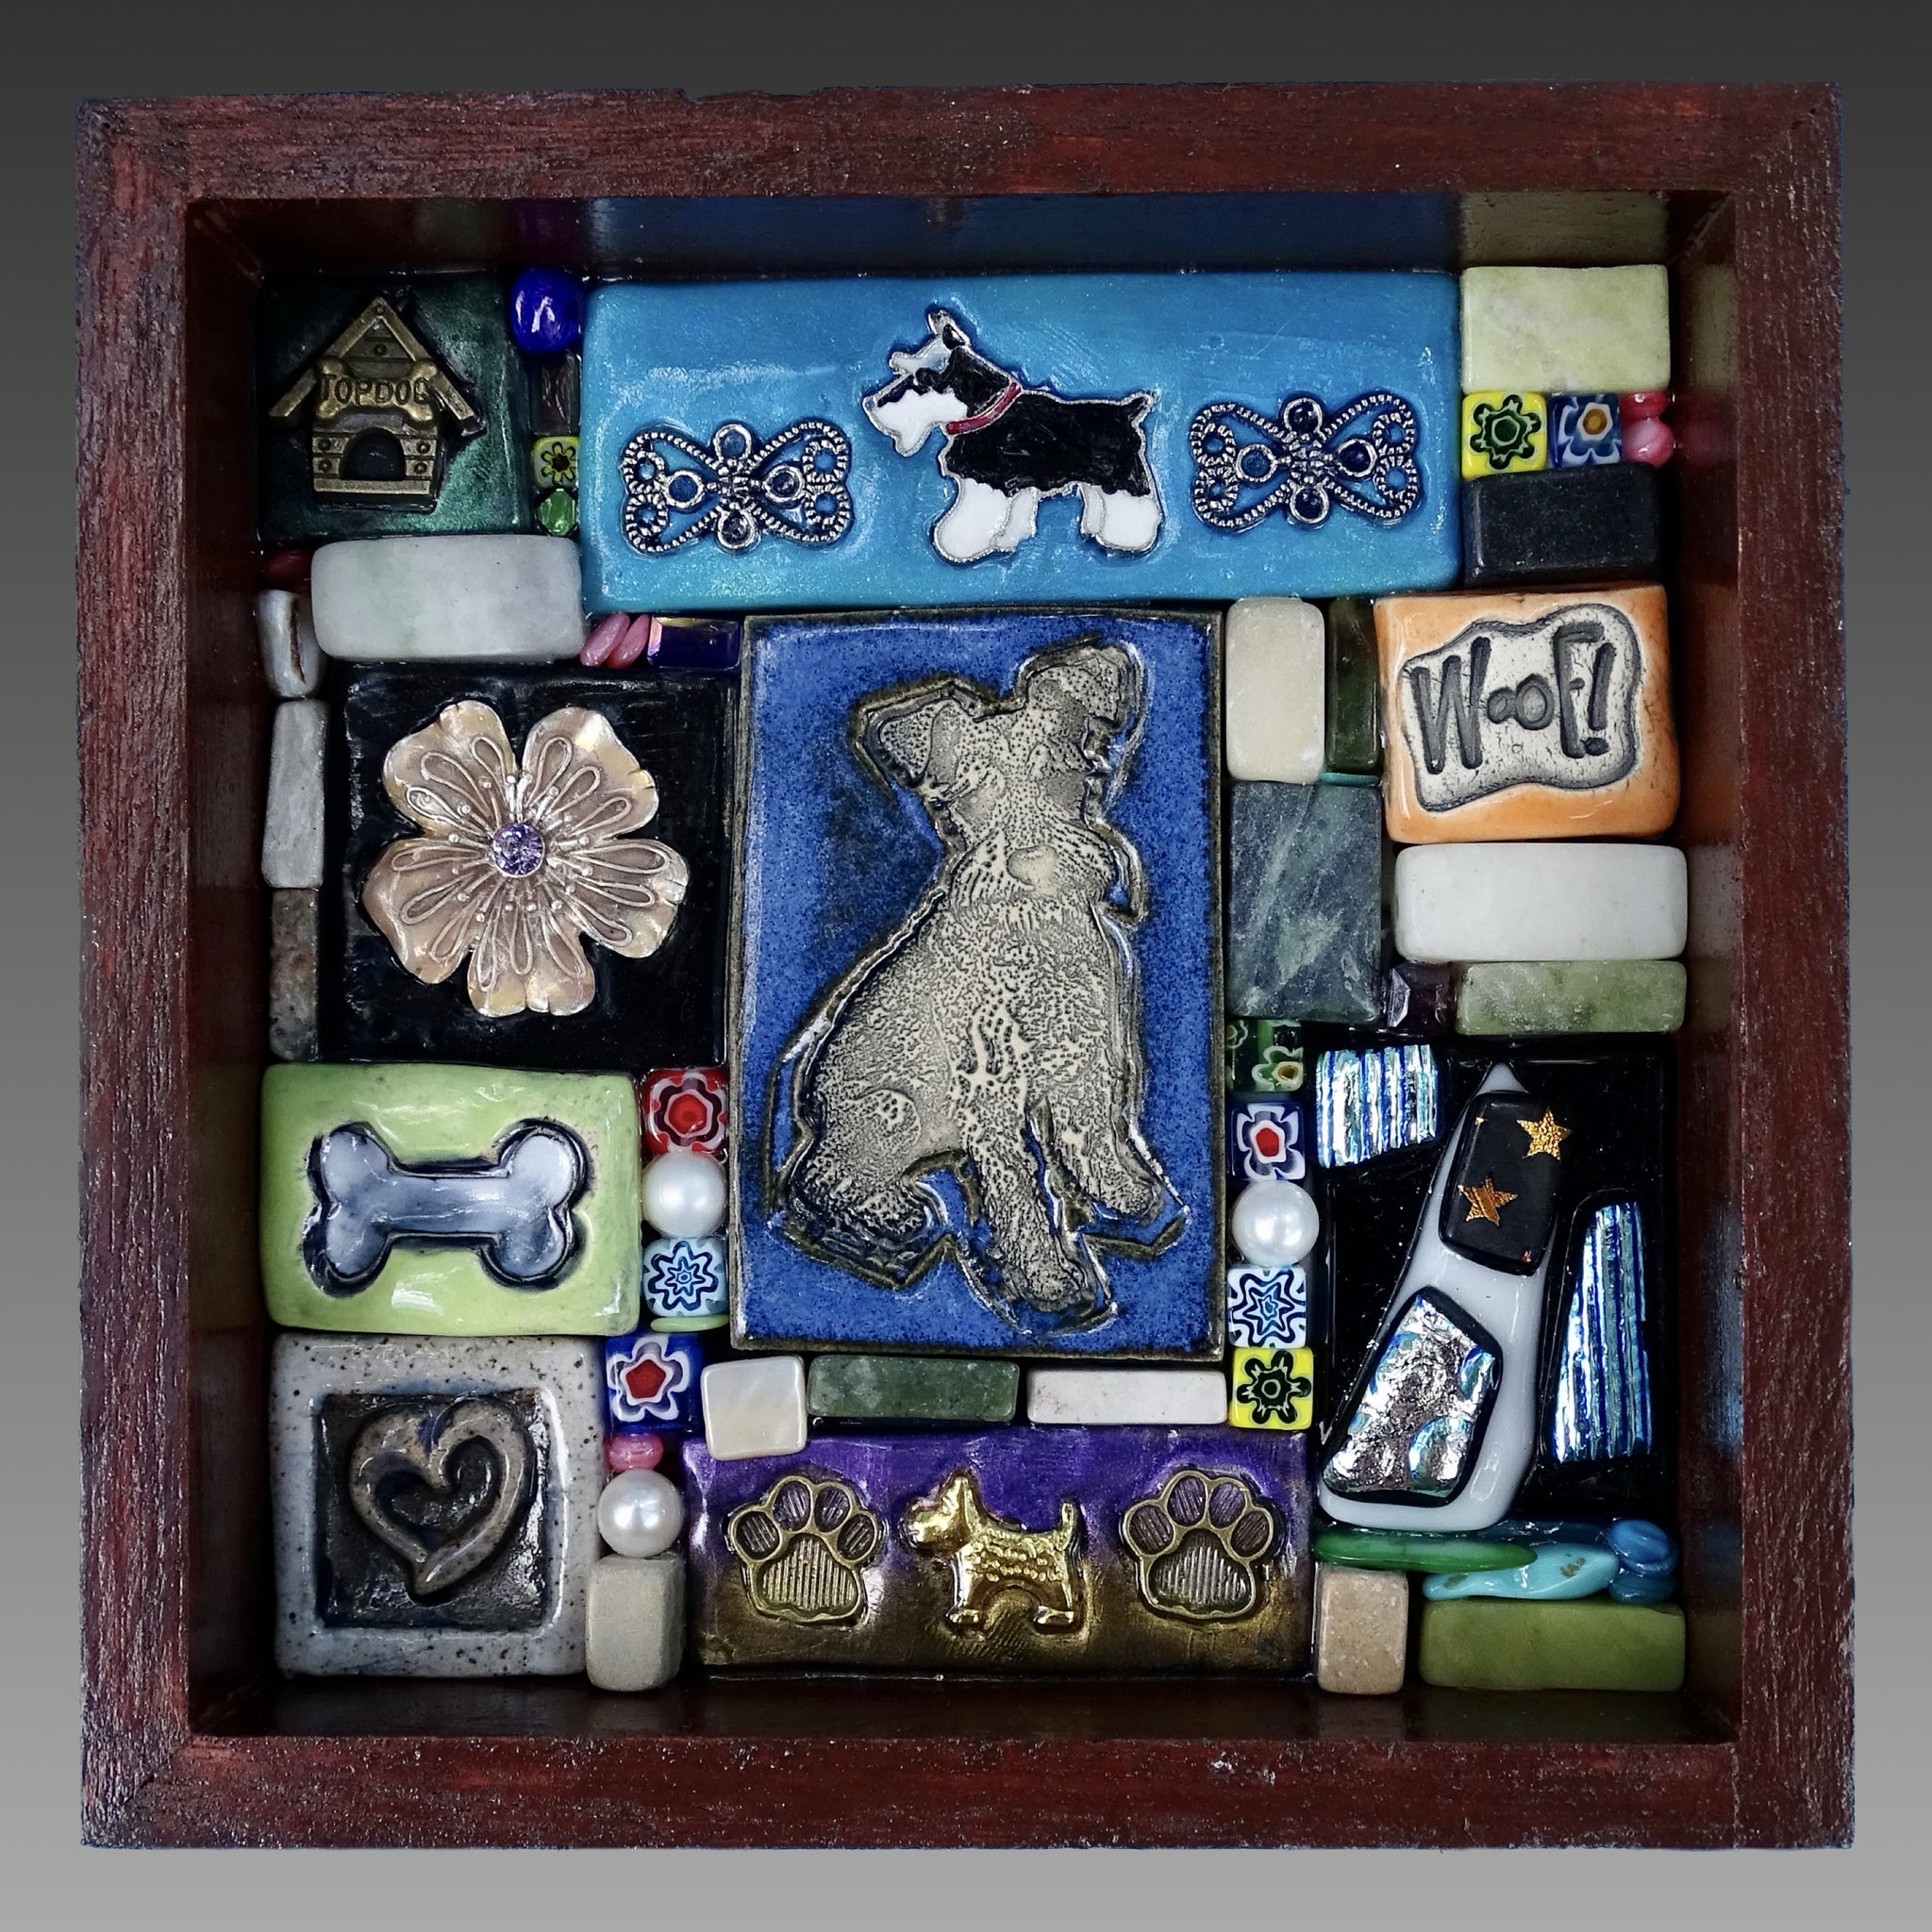 Clay mosaic art work, art with dog theme, pet, animal, schnauzer, bone, woof, heart, pawprint, unique gift idea for pet parent, dog lover, mom, dad, breeder, rescue, adopt